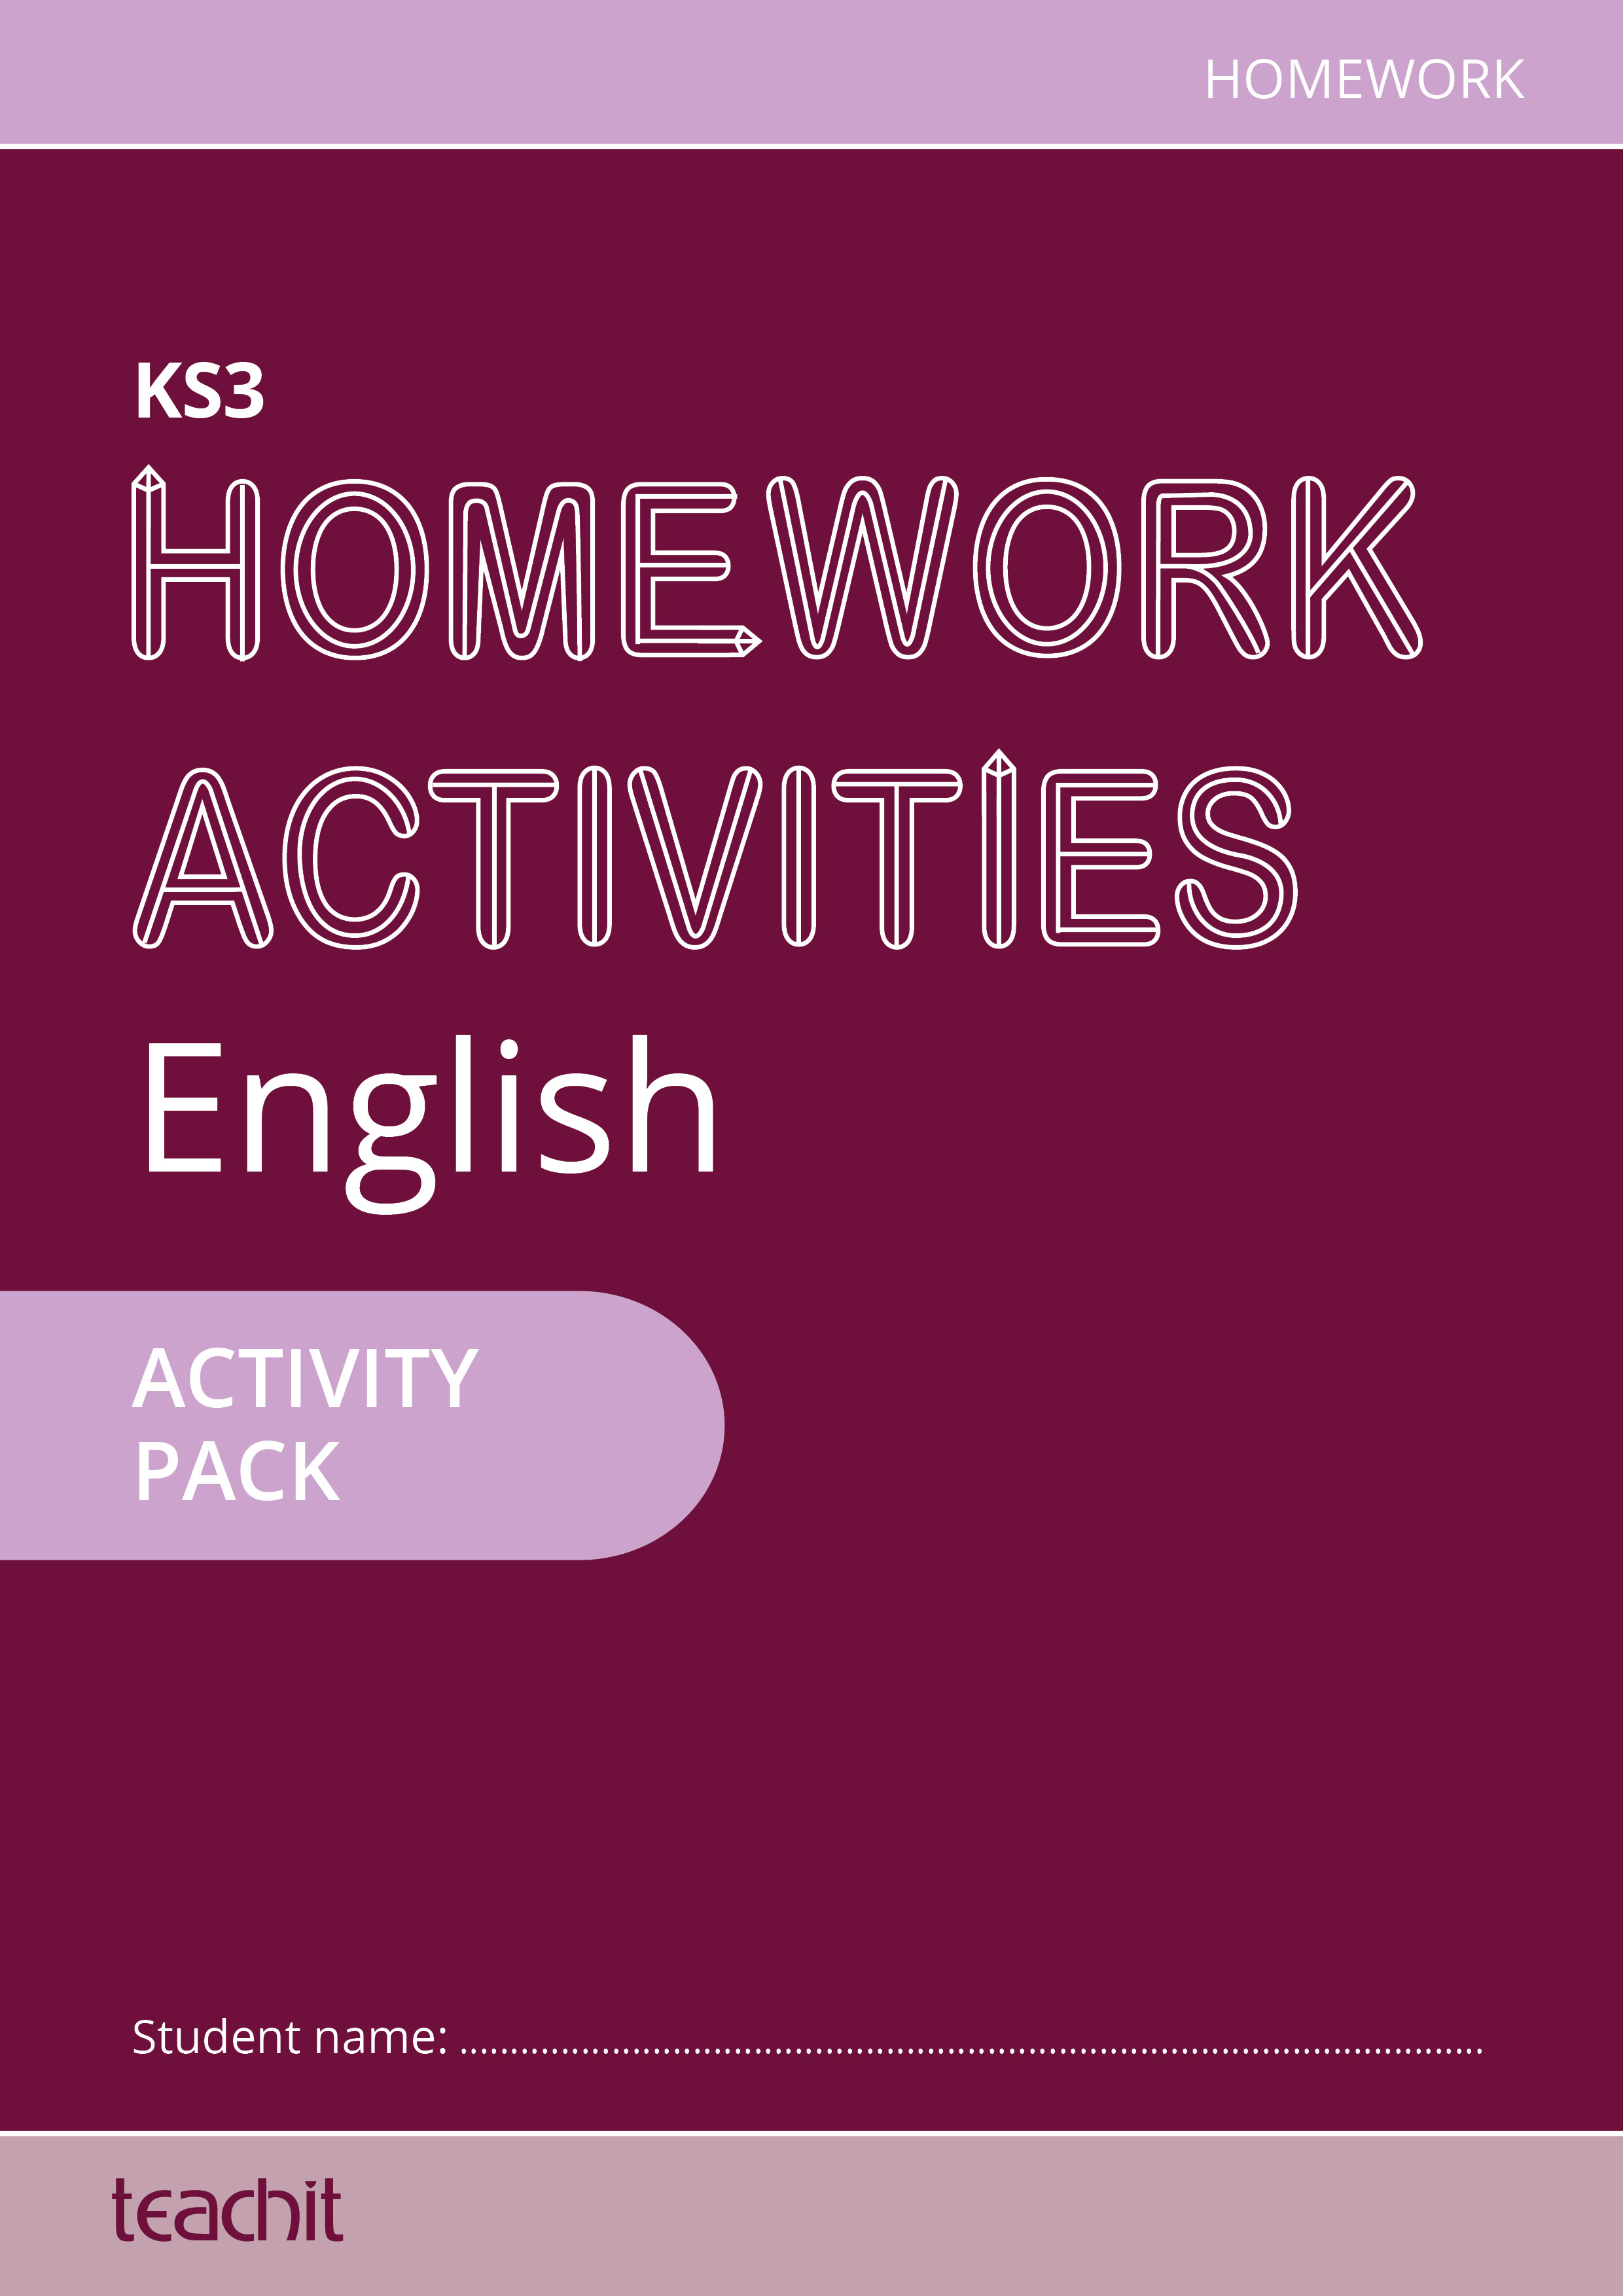 year 7 english homework booklet